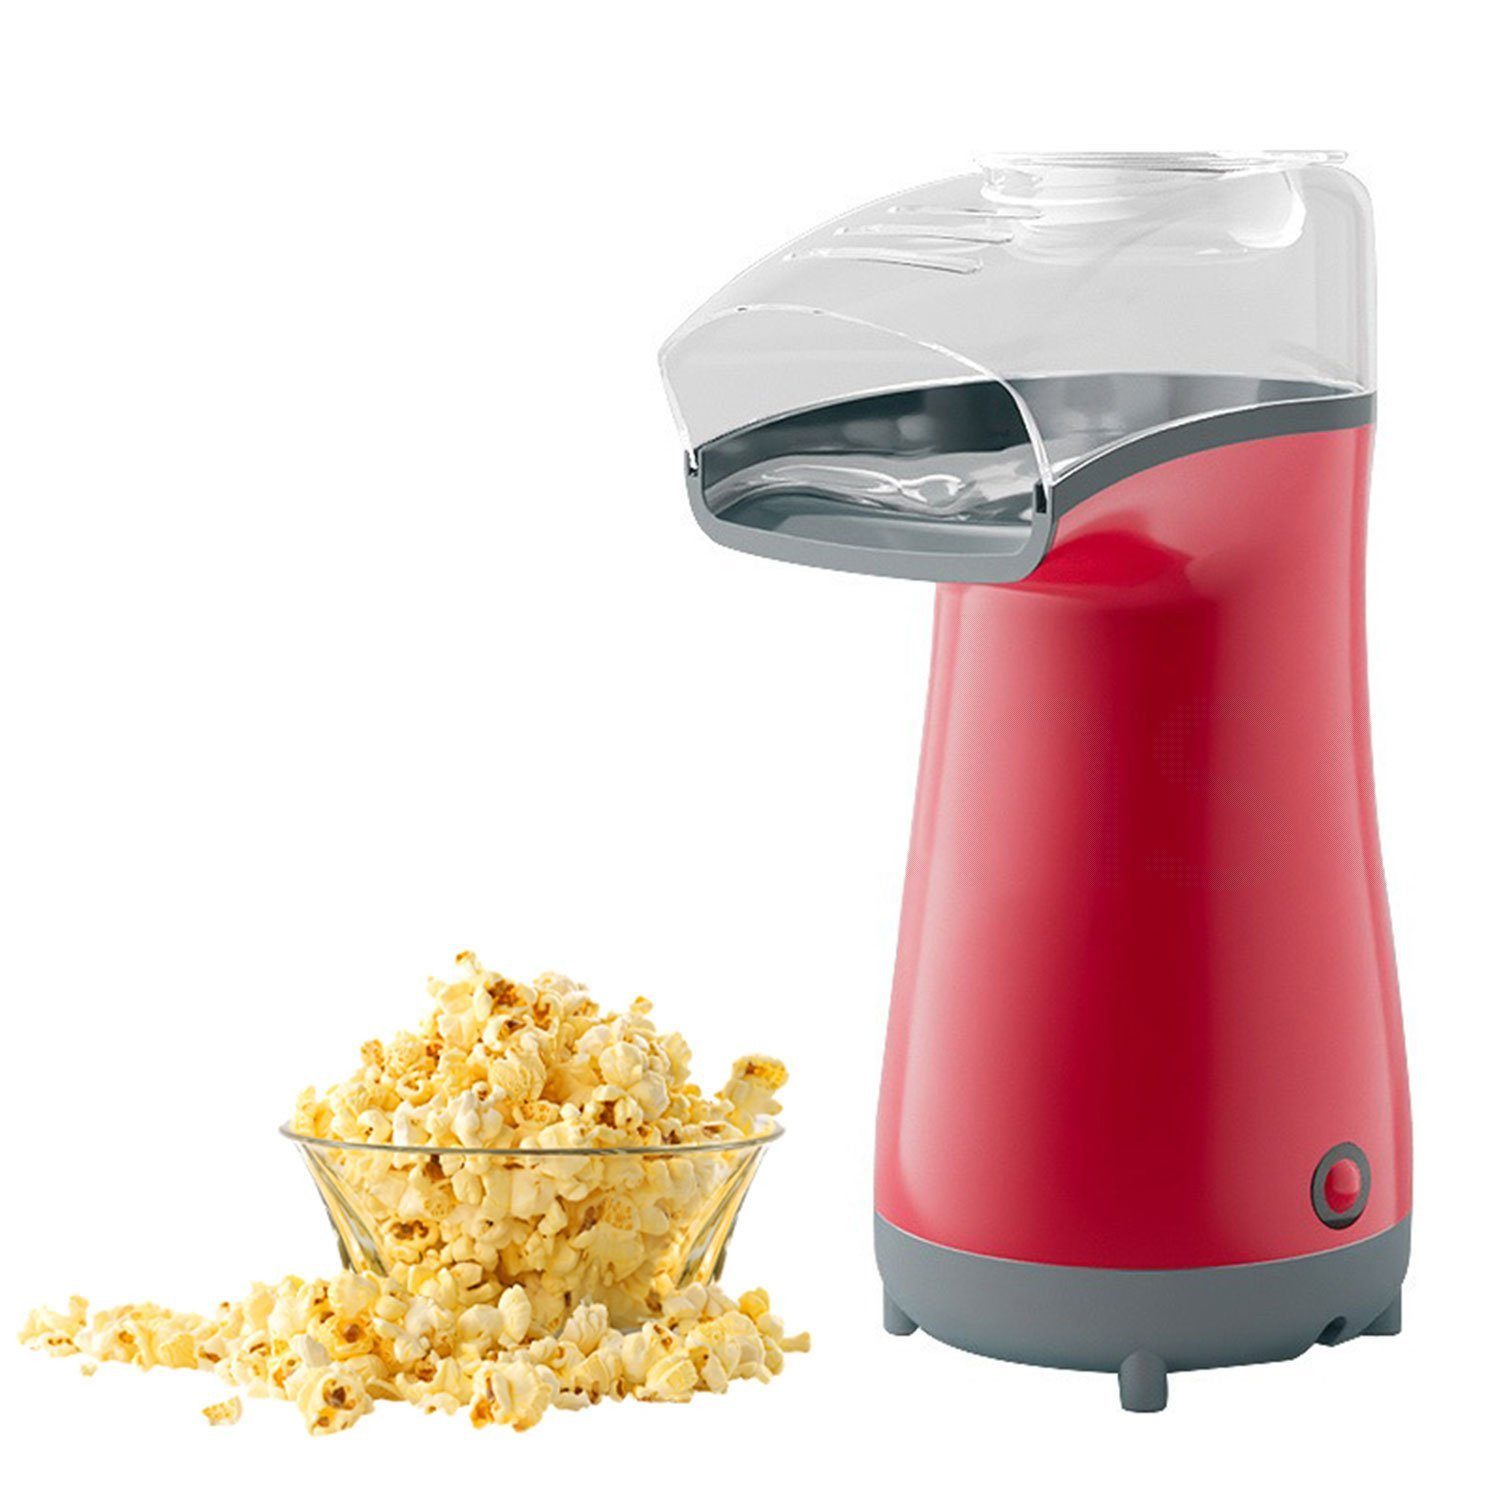 Gontence Popcornmaschine 1200W, Heißluftpopcorn